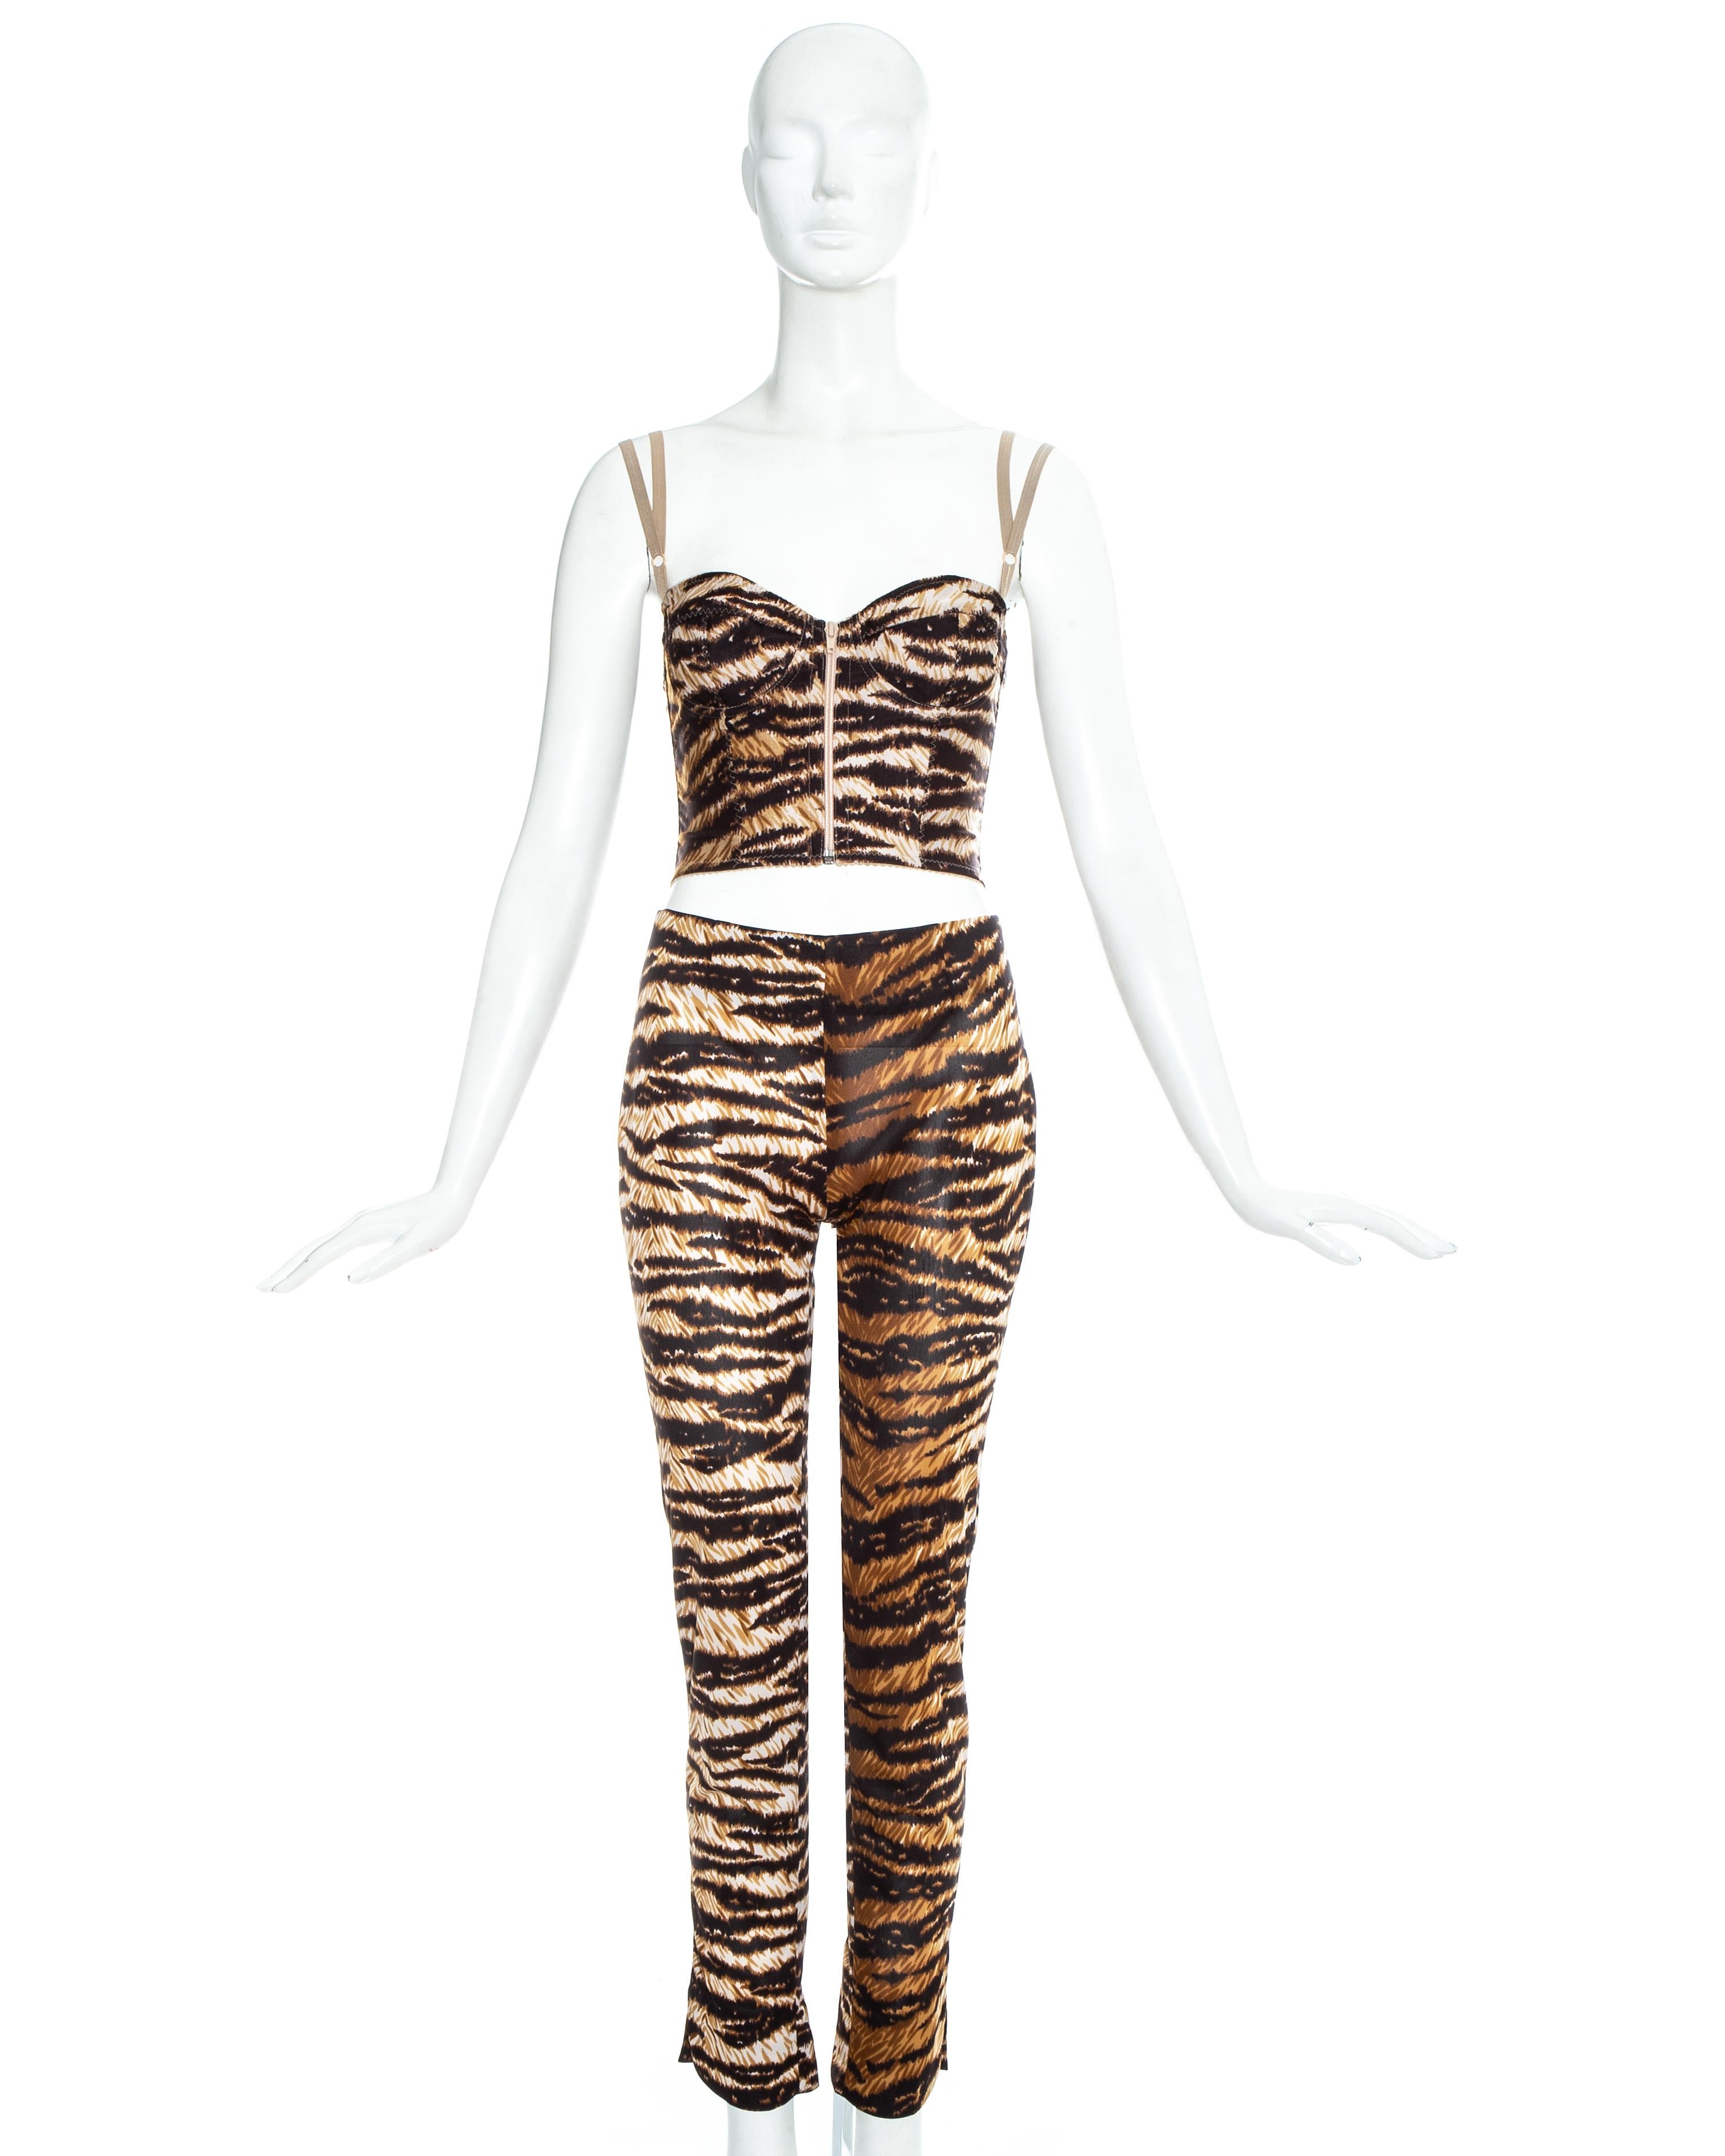 Dolce & Gabbana tiger printed lycra corset and pants

Spring-Summer 1996